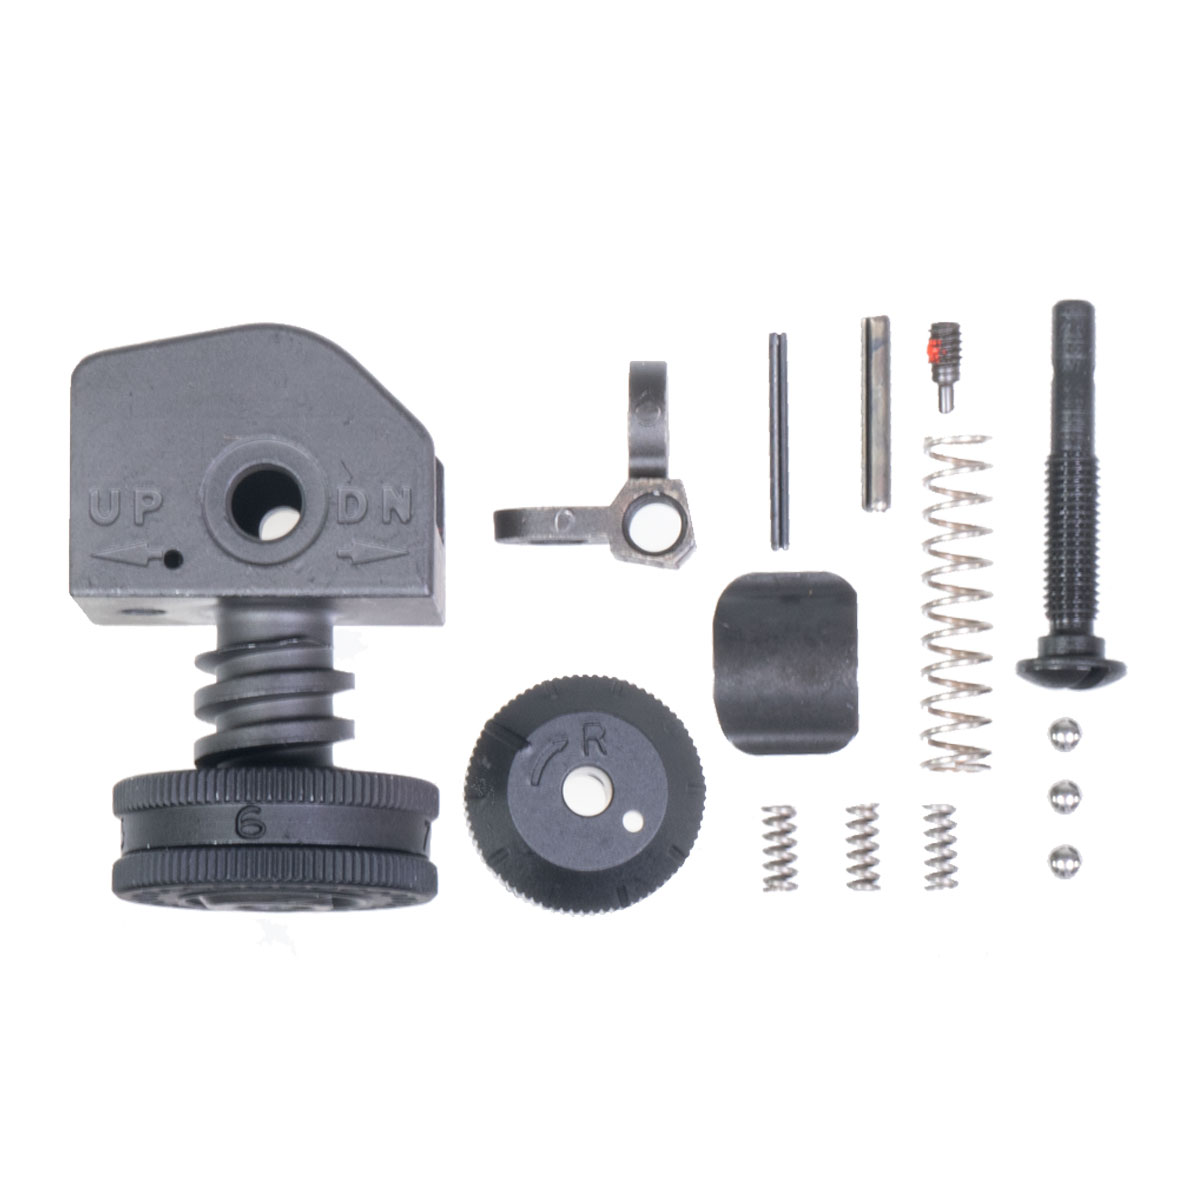 Luth-AR A2 Rear Sight Assembly/Kit